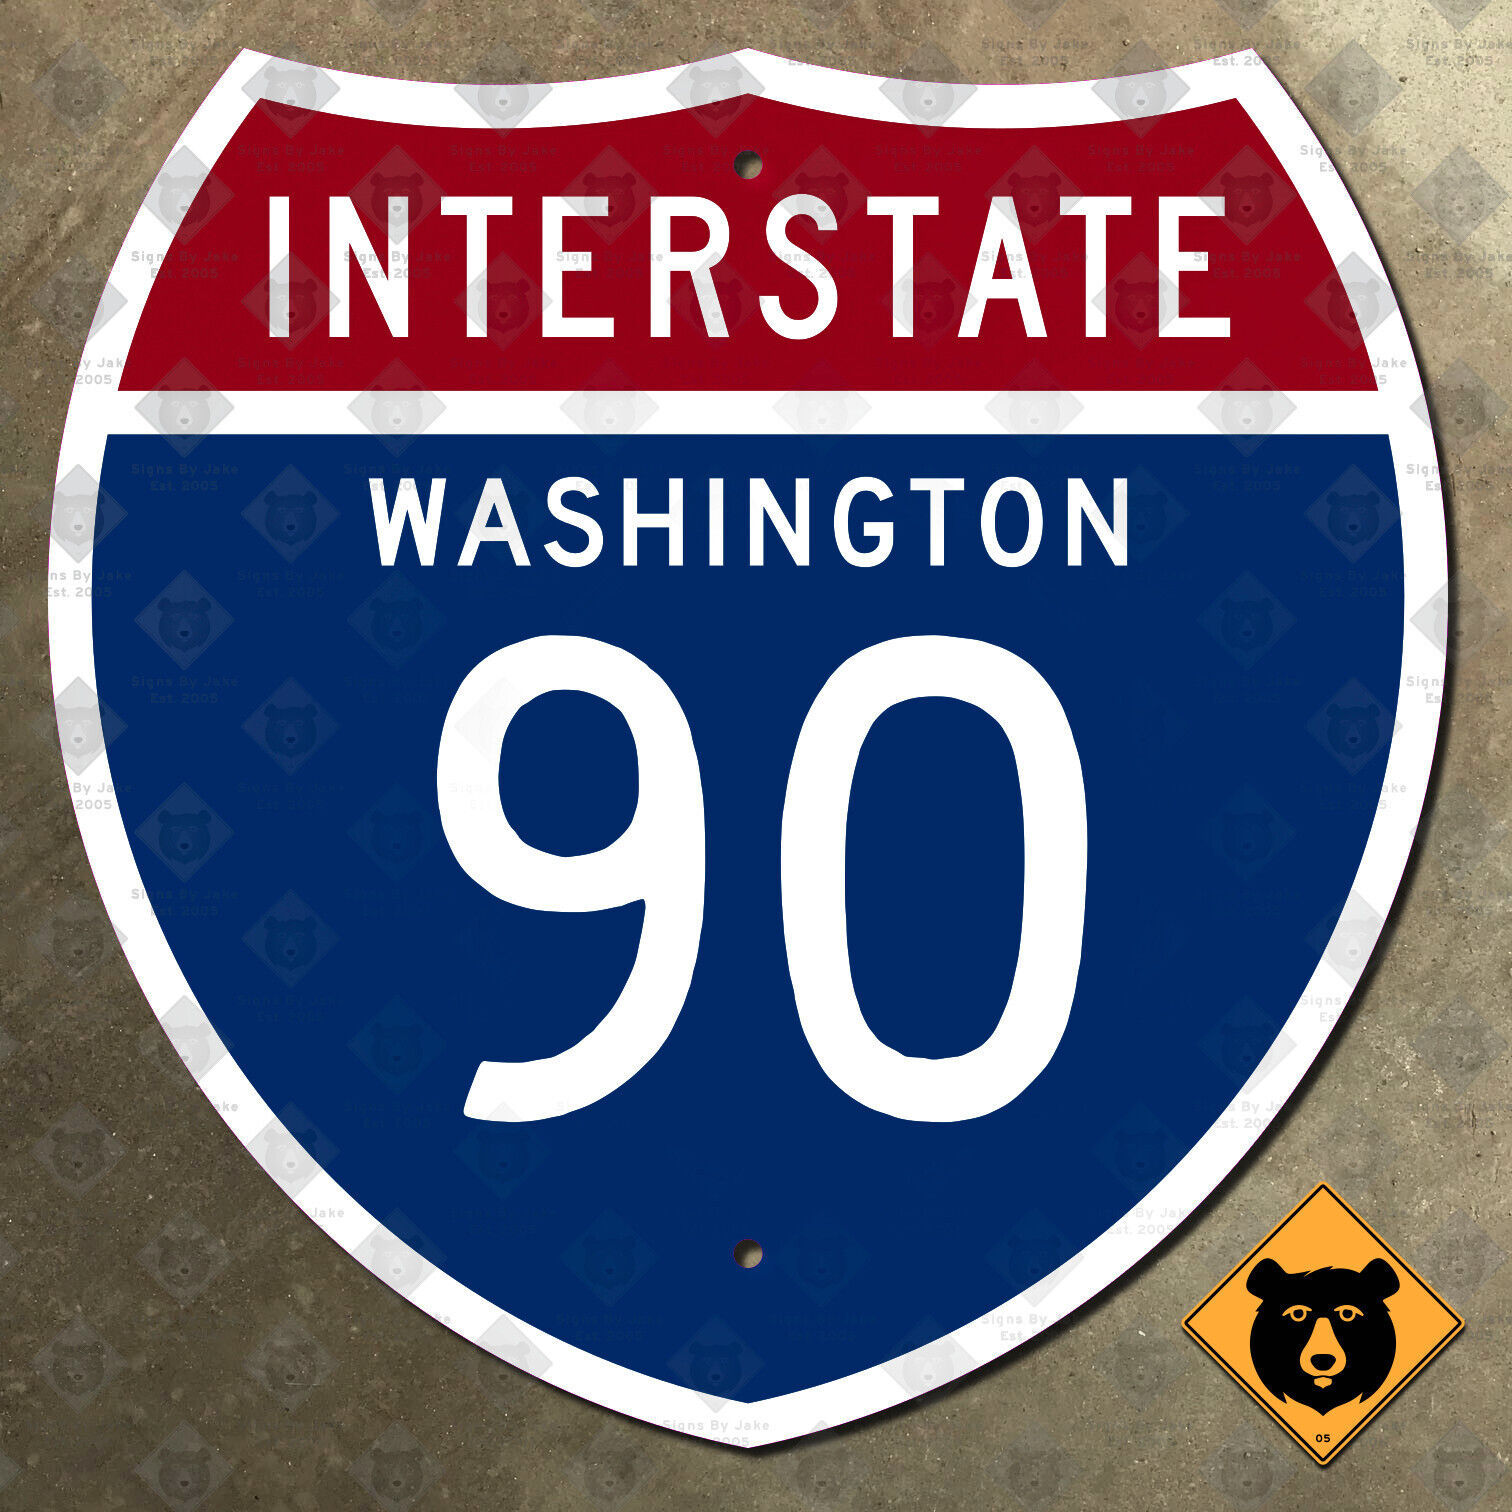 Washington interstate route 90 highway marker road sign 1957 Seattle Spokane 18\